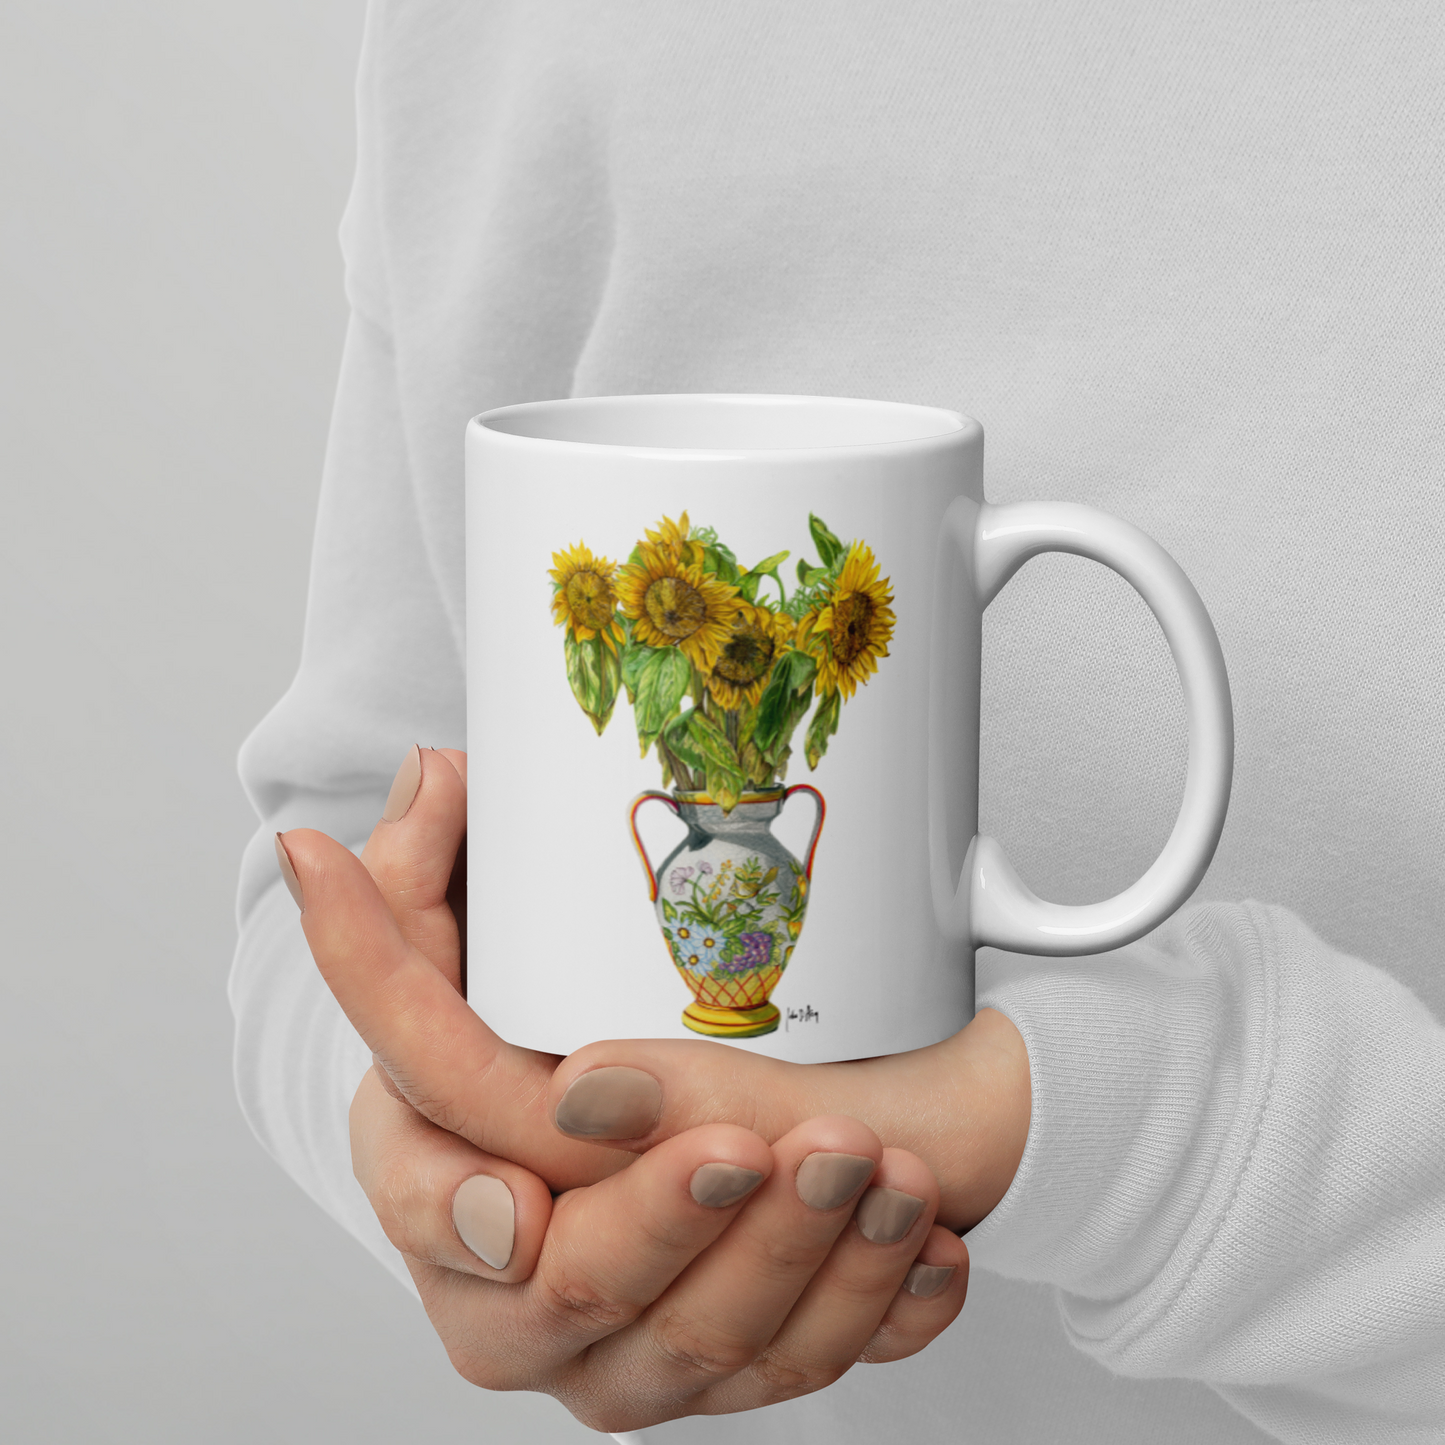 Sunny - White glossy mug